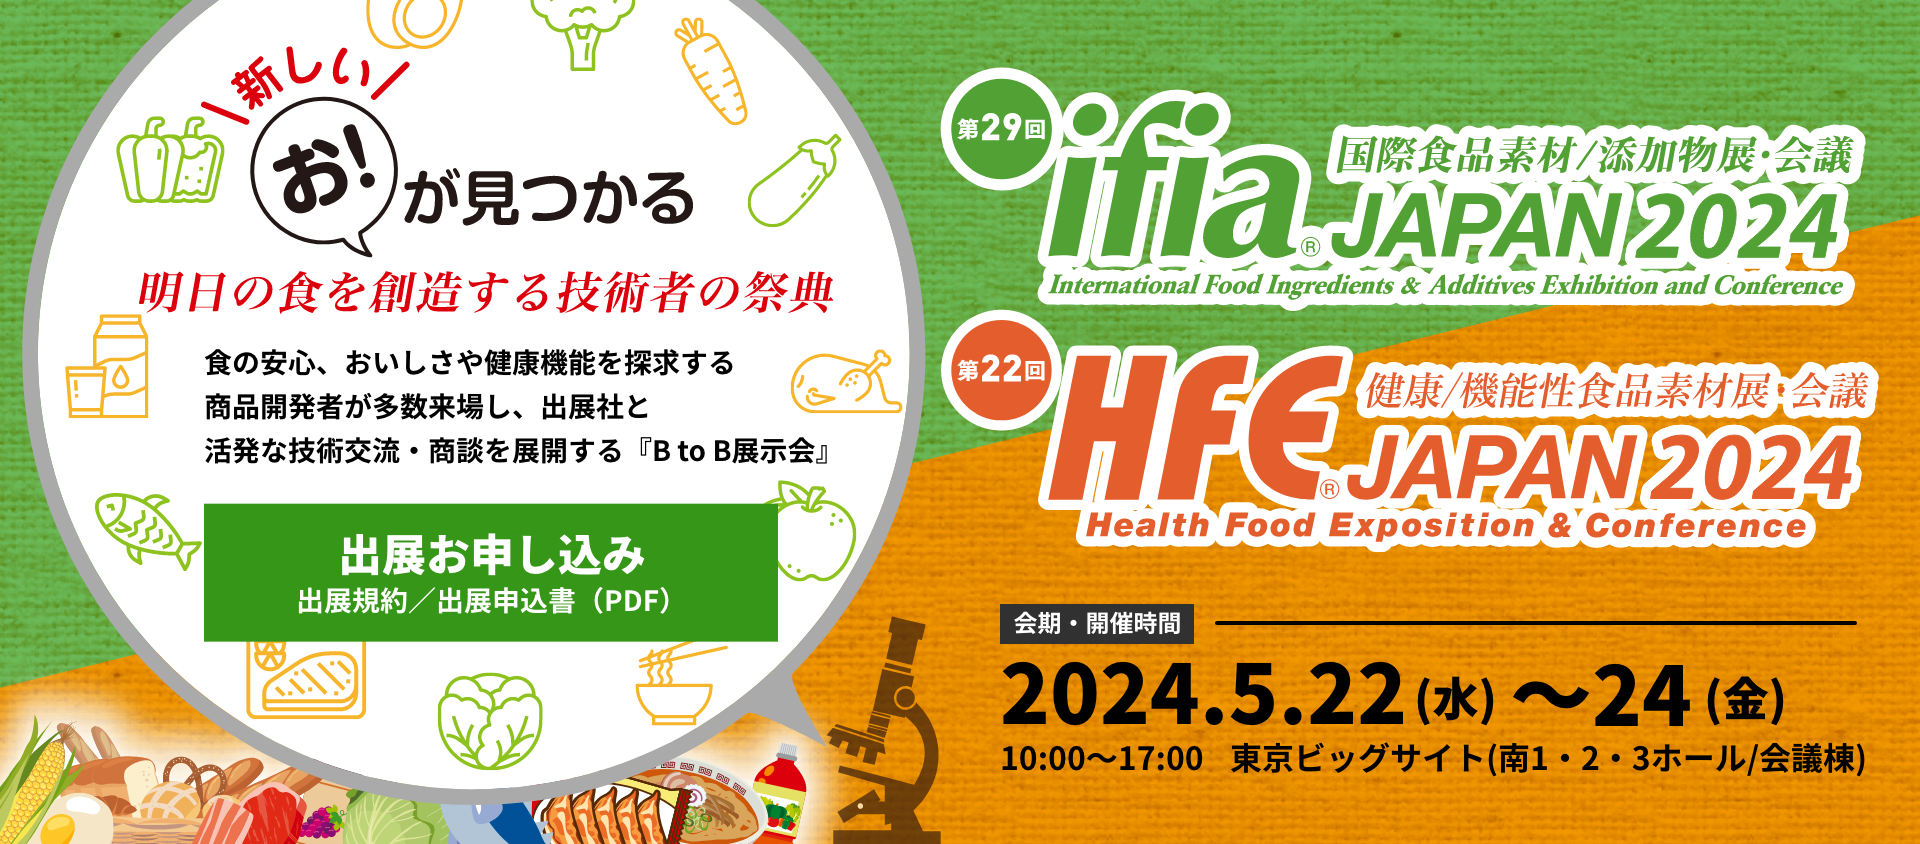 ifia/HFE JAPAN事務局（株式会社食品化学新聞社内）